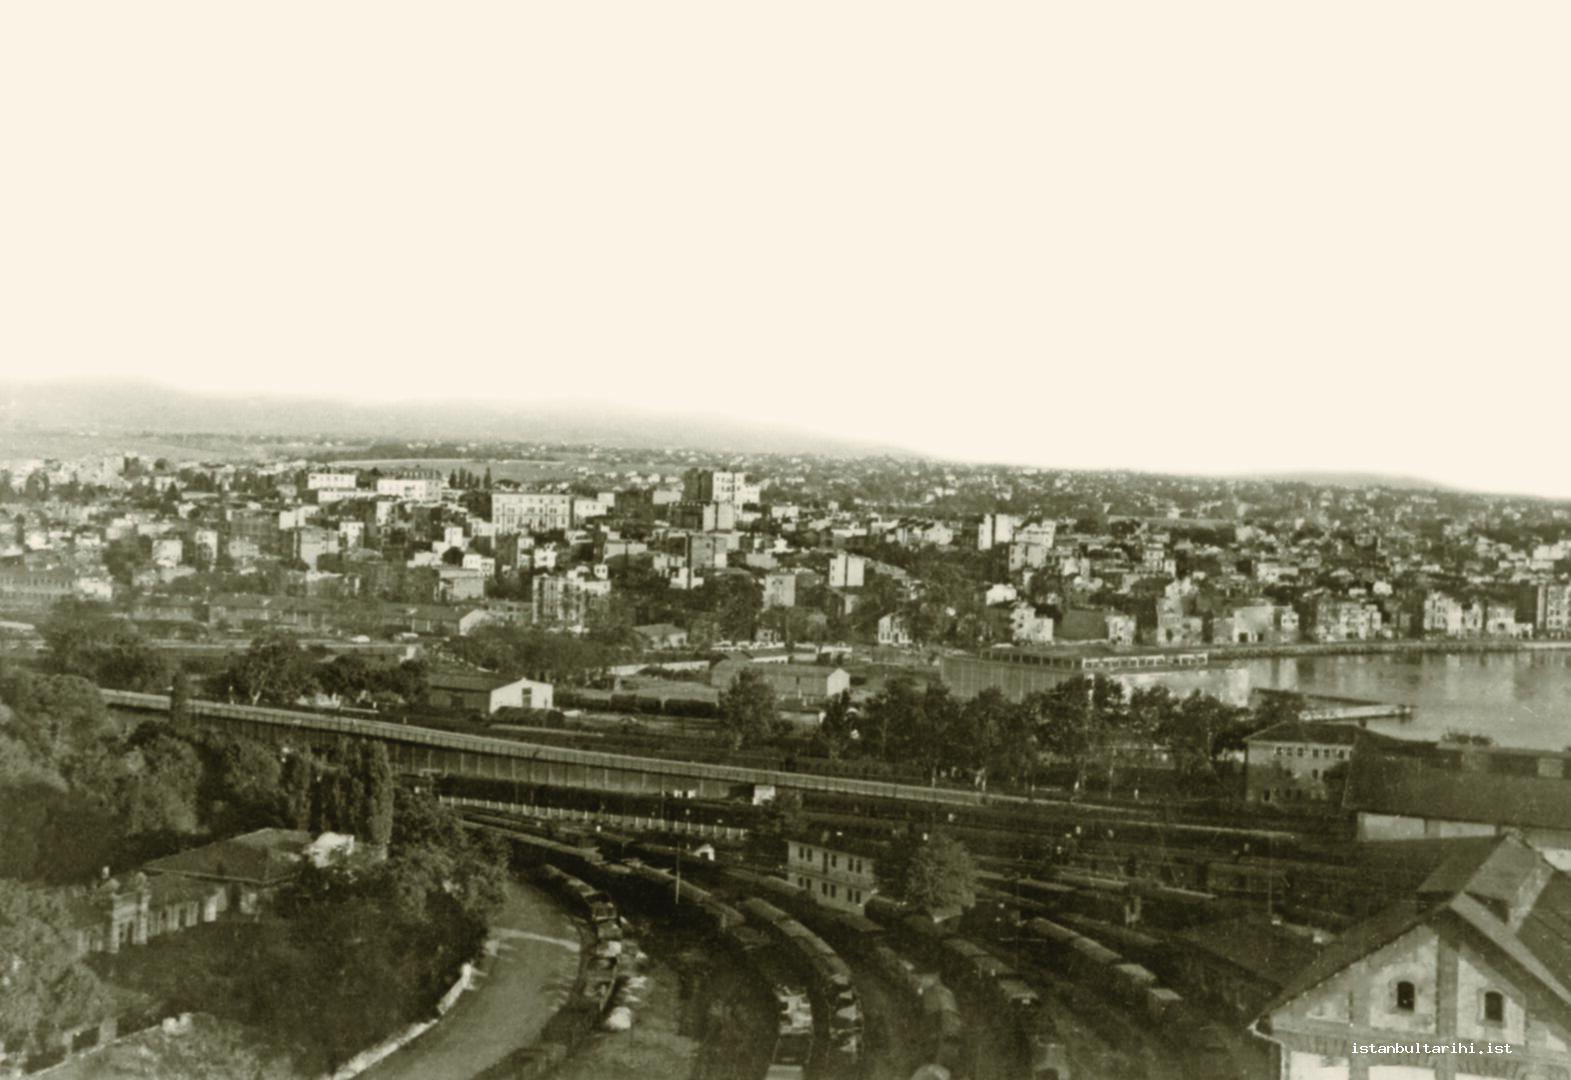 4- Haydarpaşa and Kadıköy